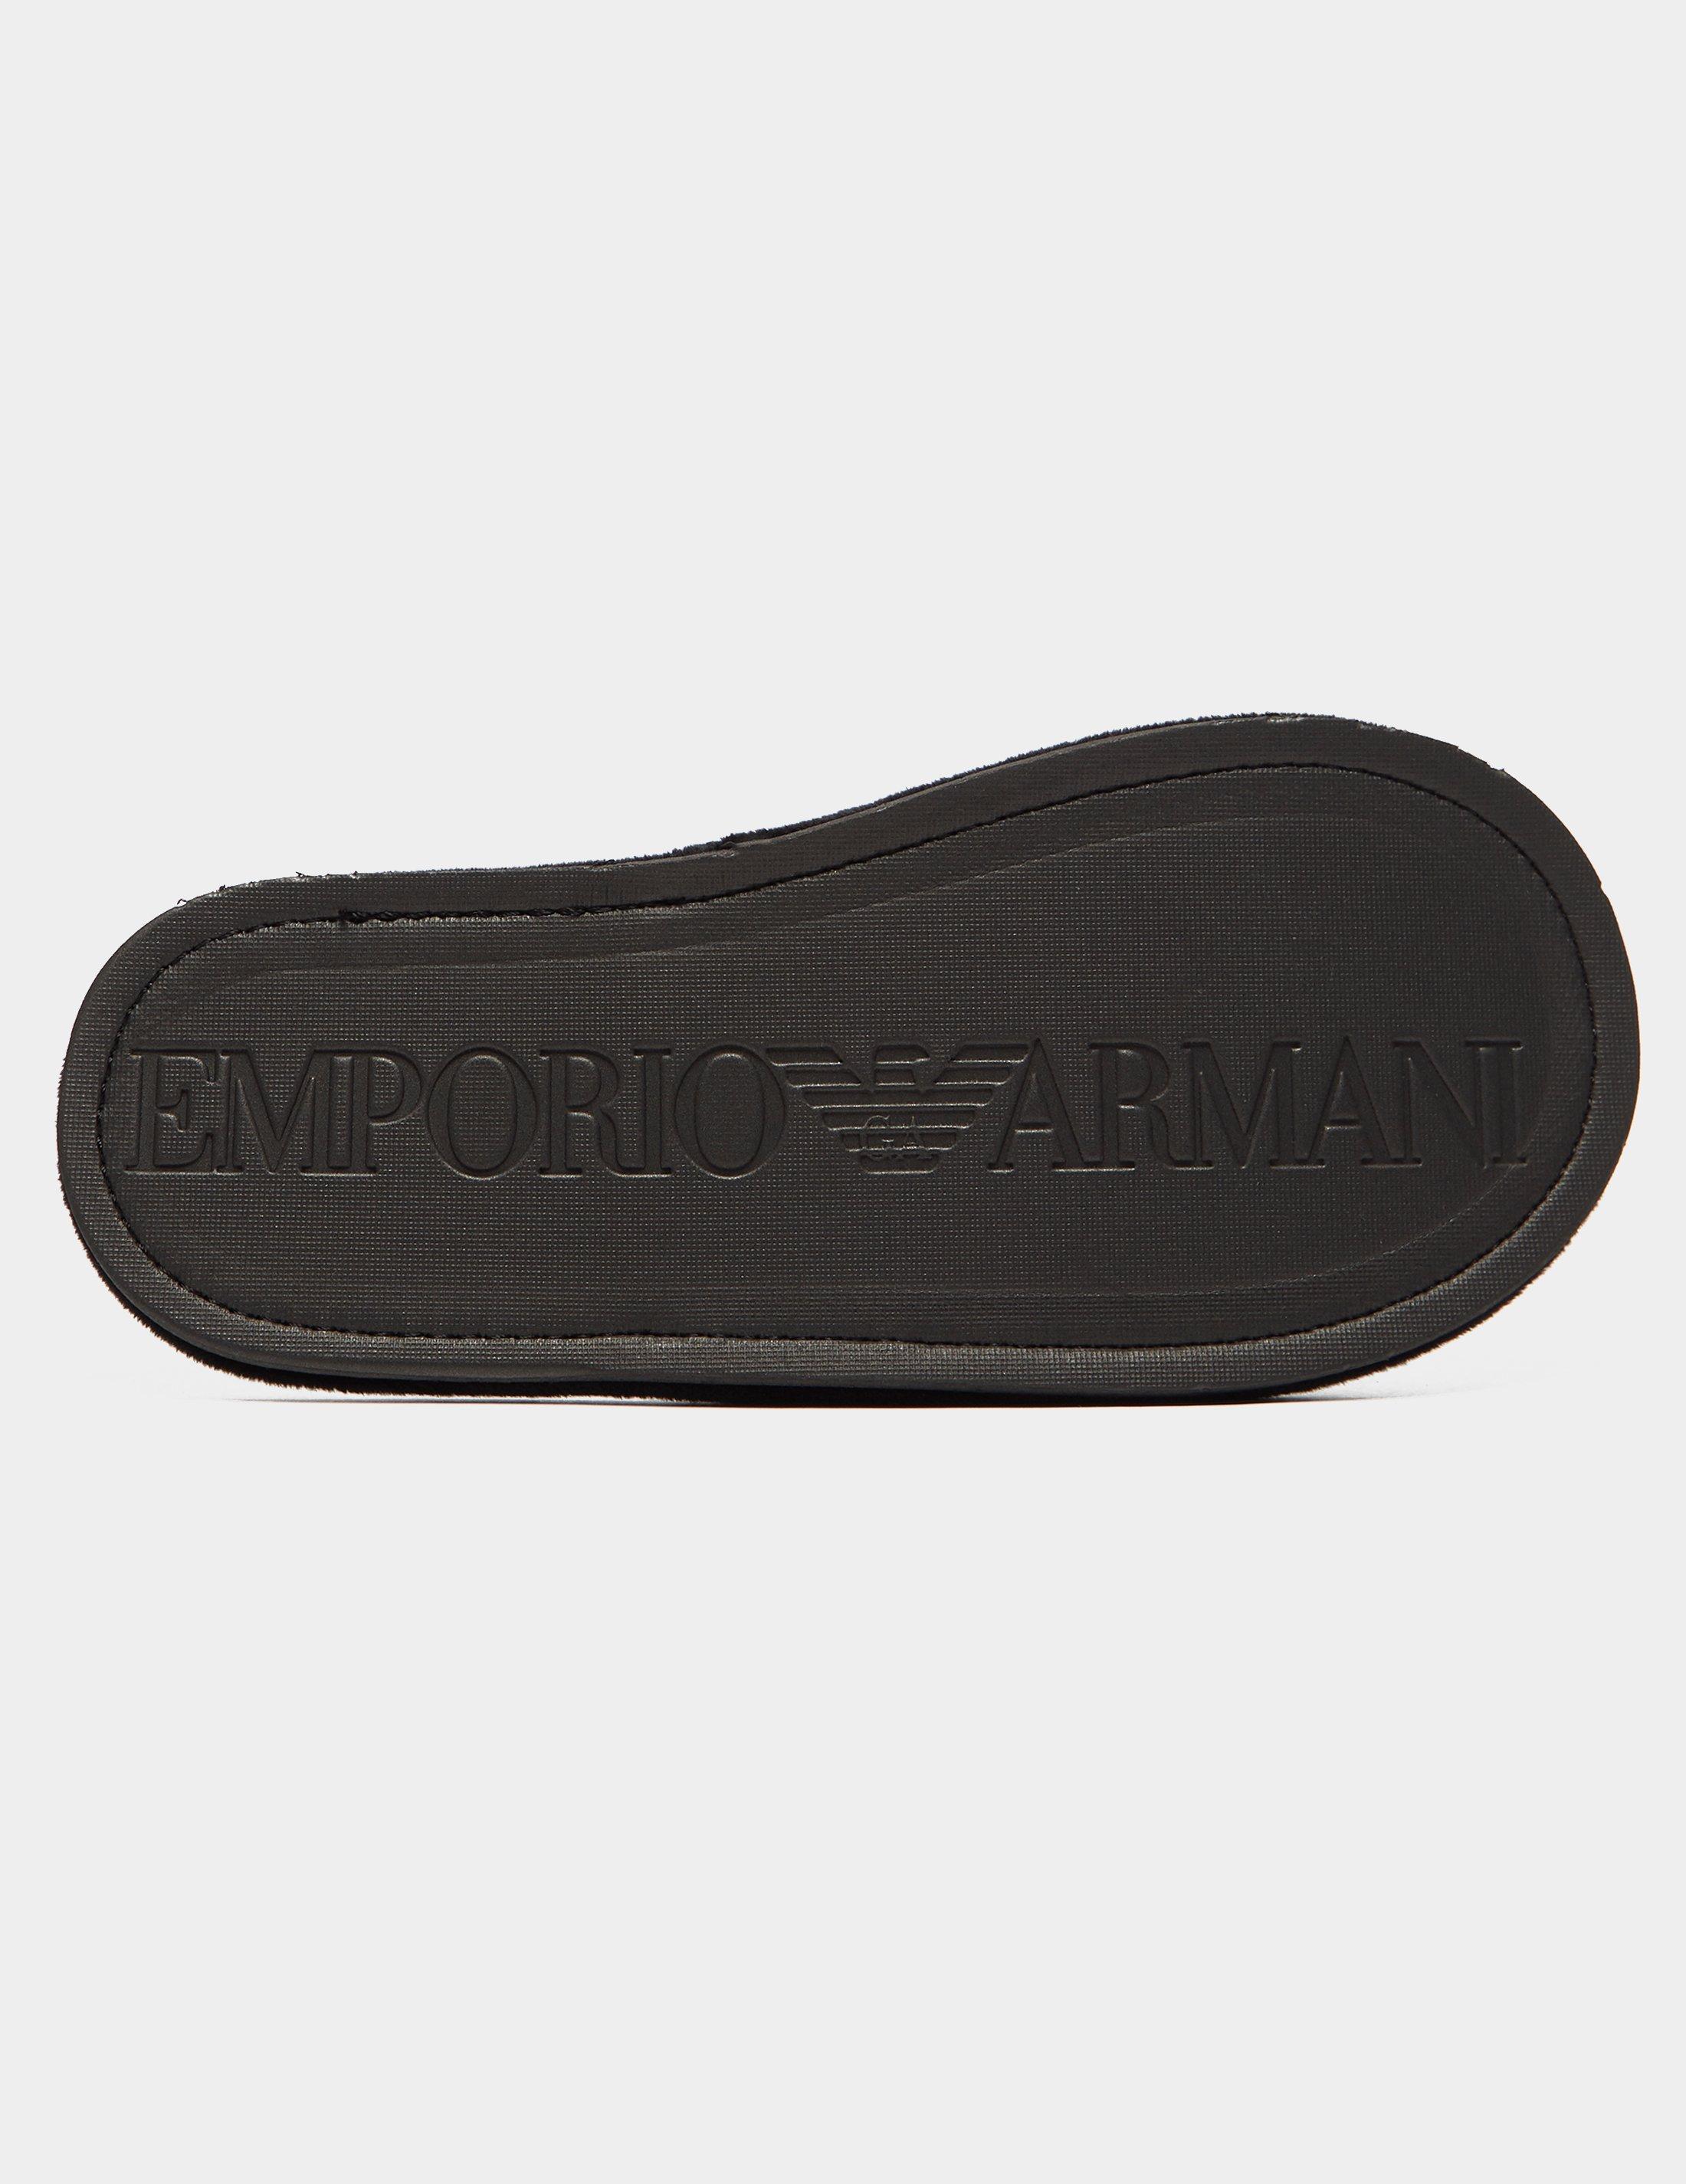 Emporio Armani Velour Slippers Black/black for Men - Lyst